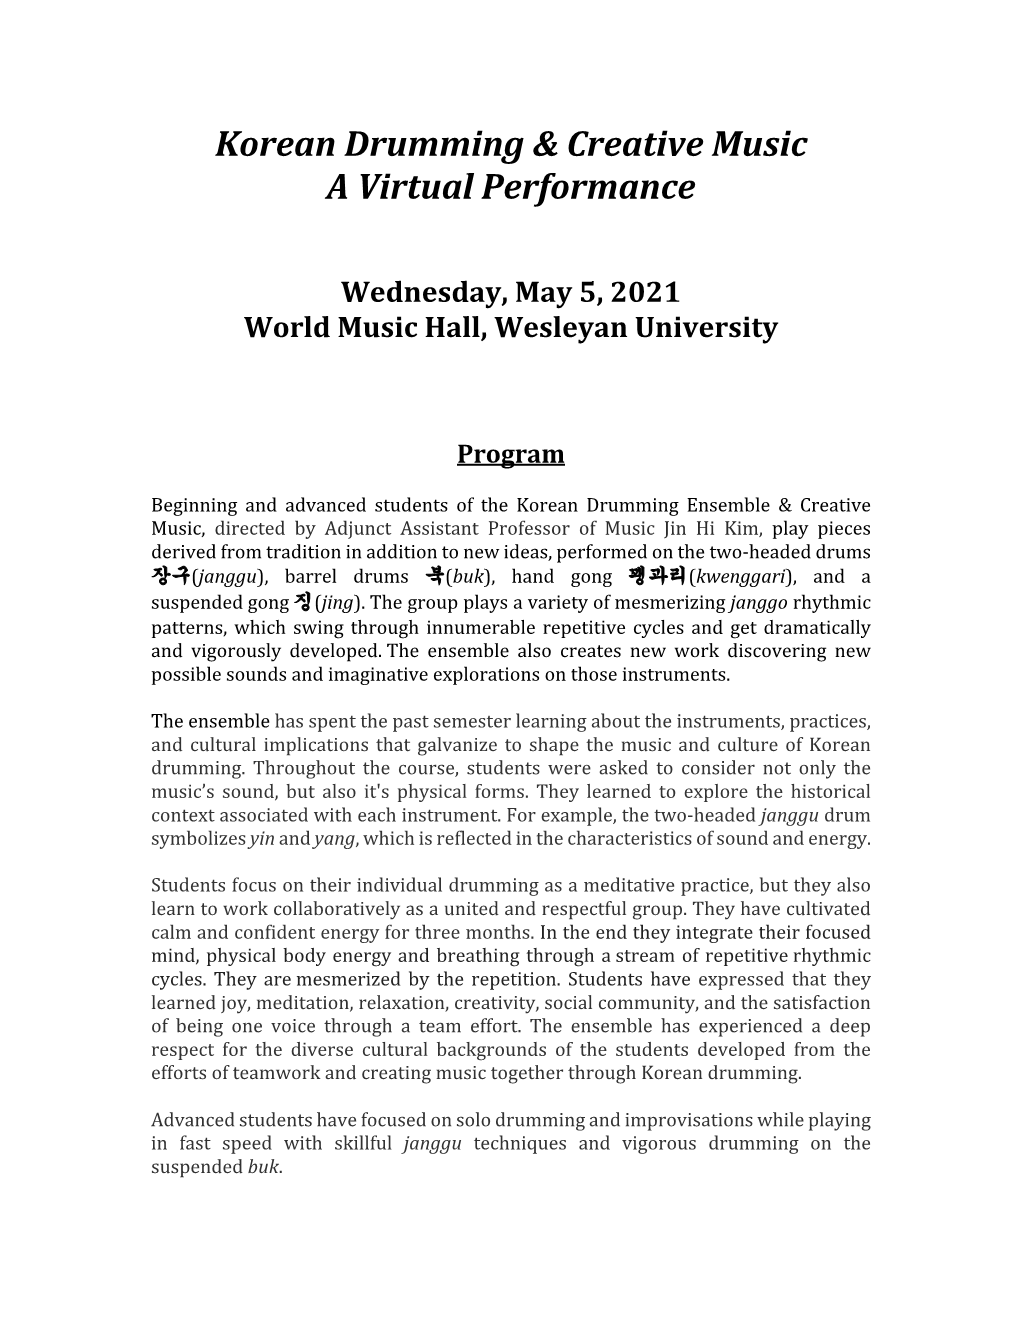 Korean Drumming and Creative Music Virtual Performance Program Here